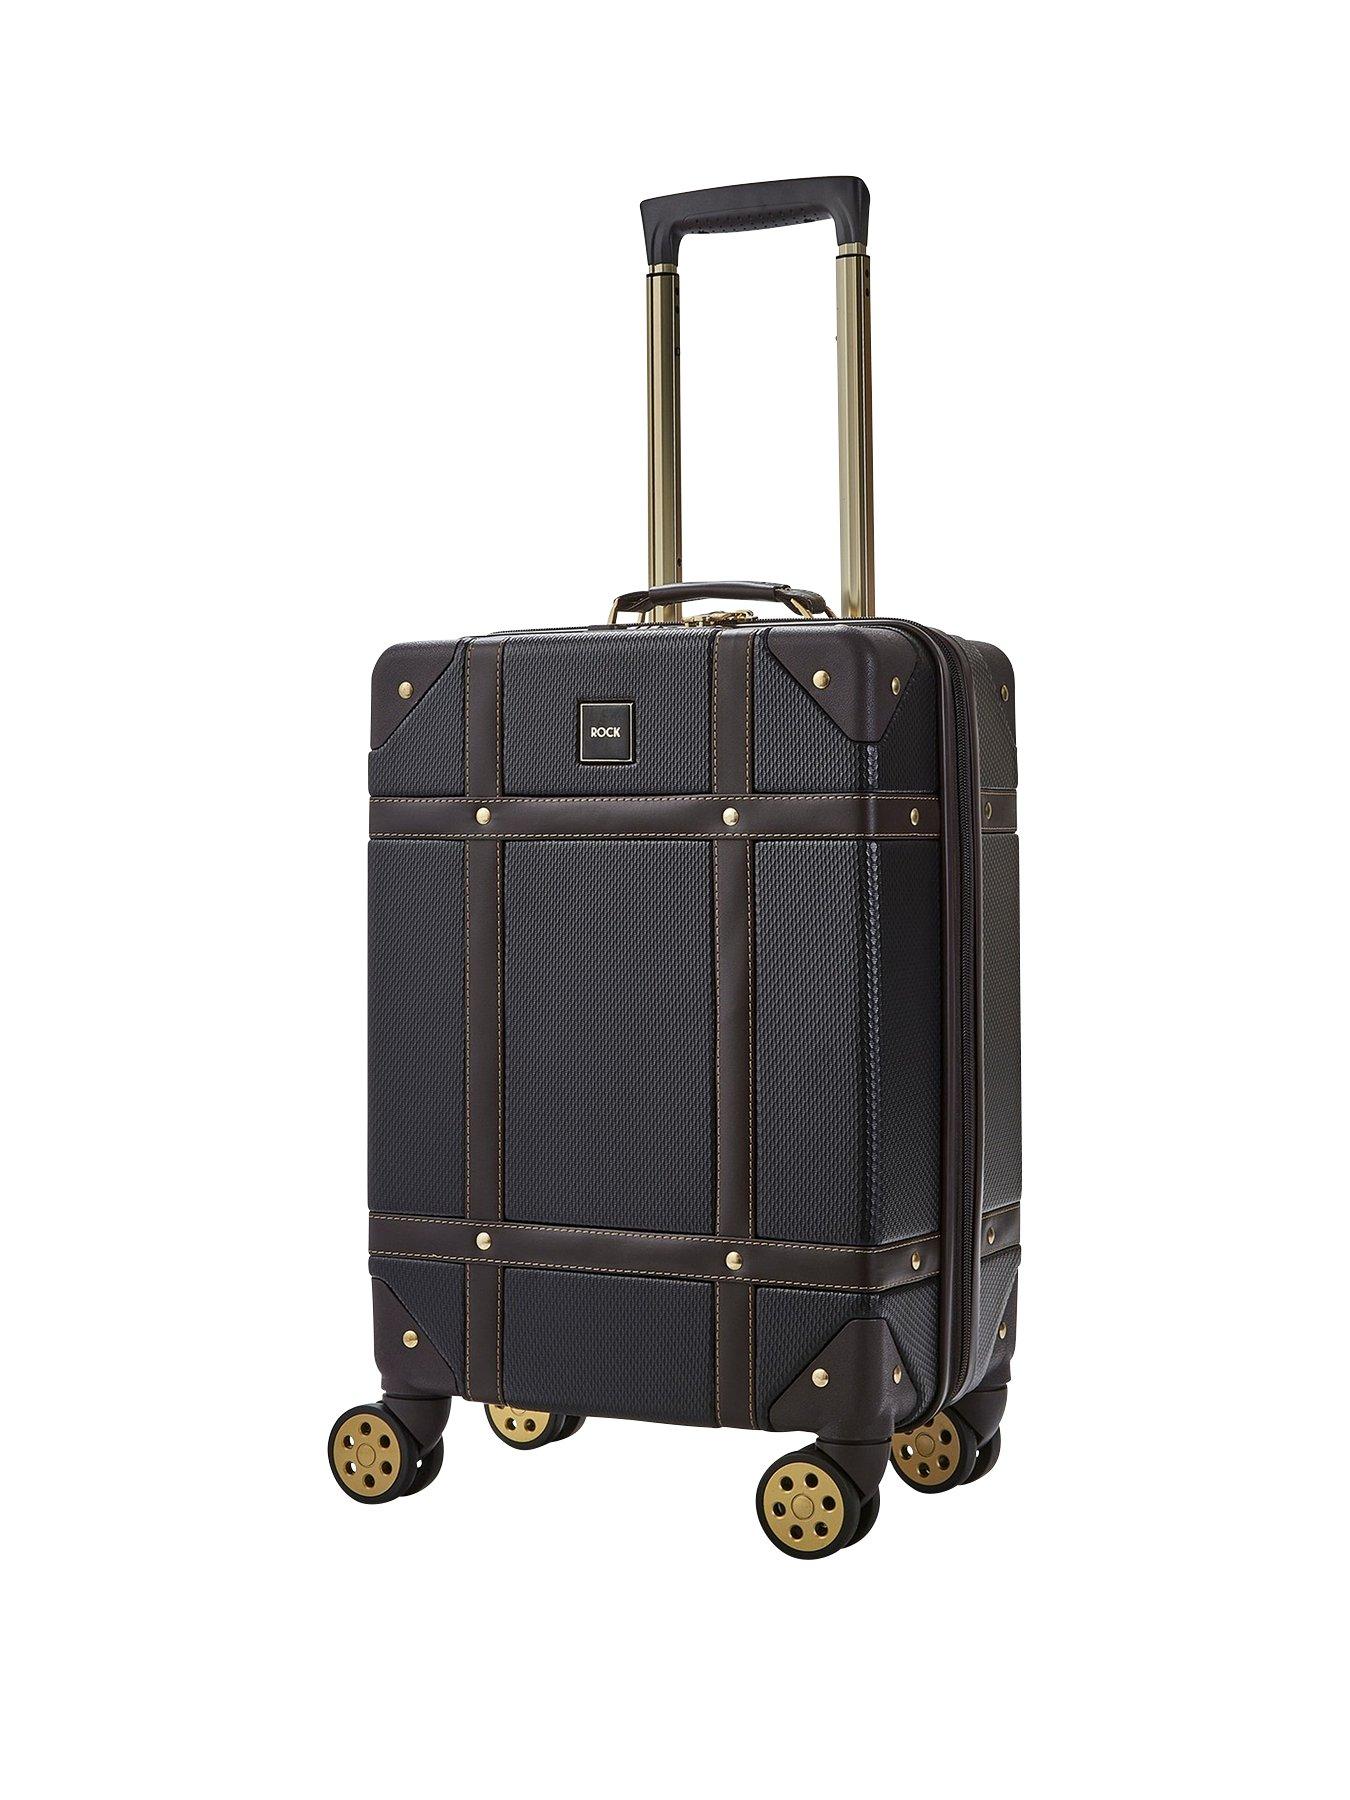 Rock Luggage Vintage Carry-on 8-Wheel Suitcase - Black | very.co.uk